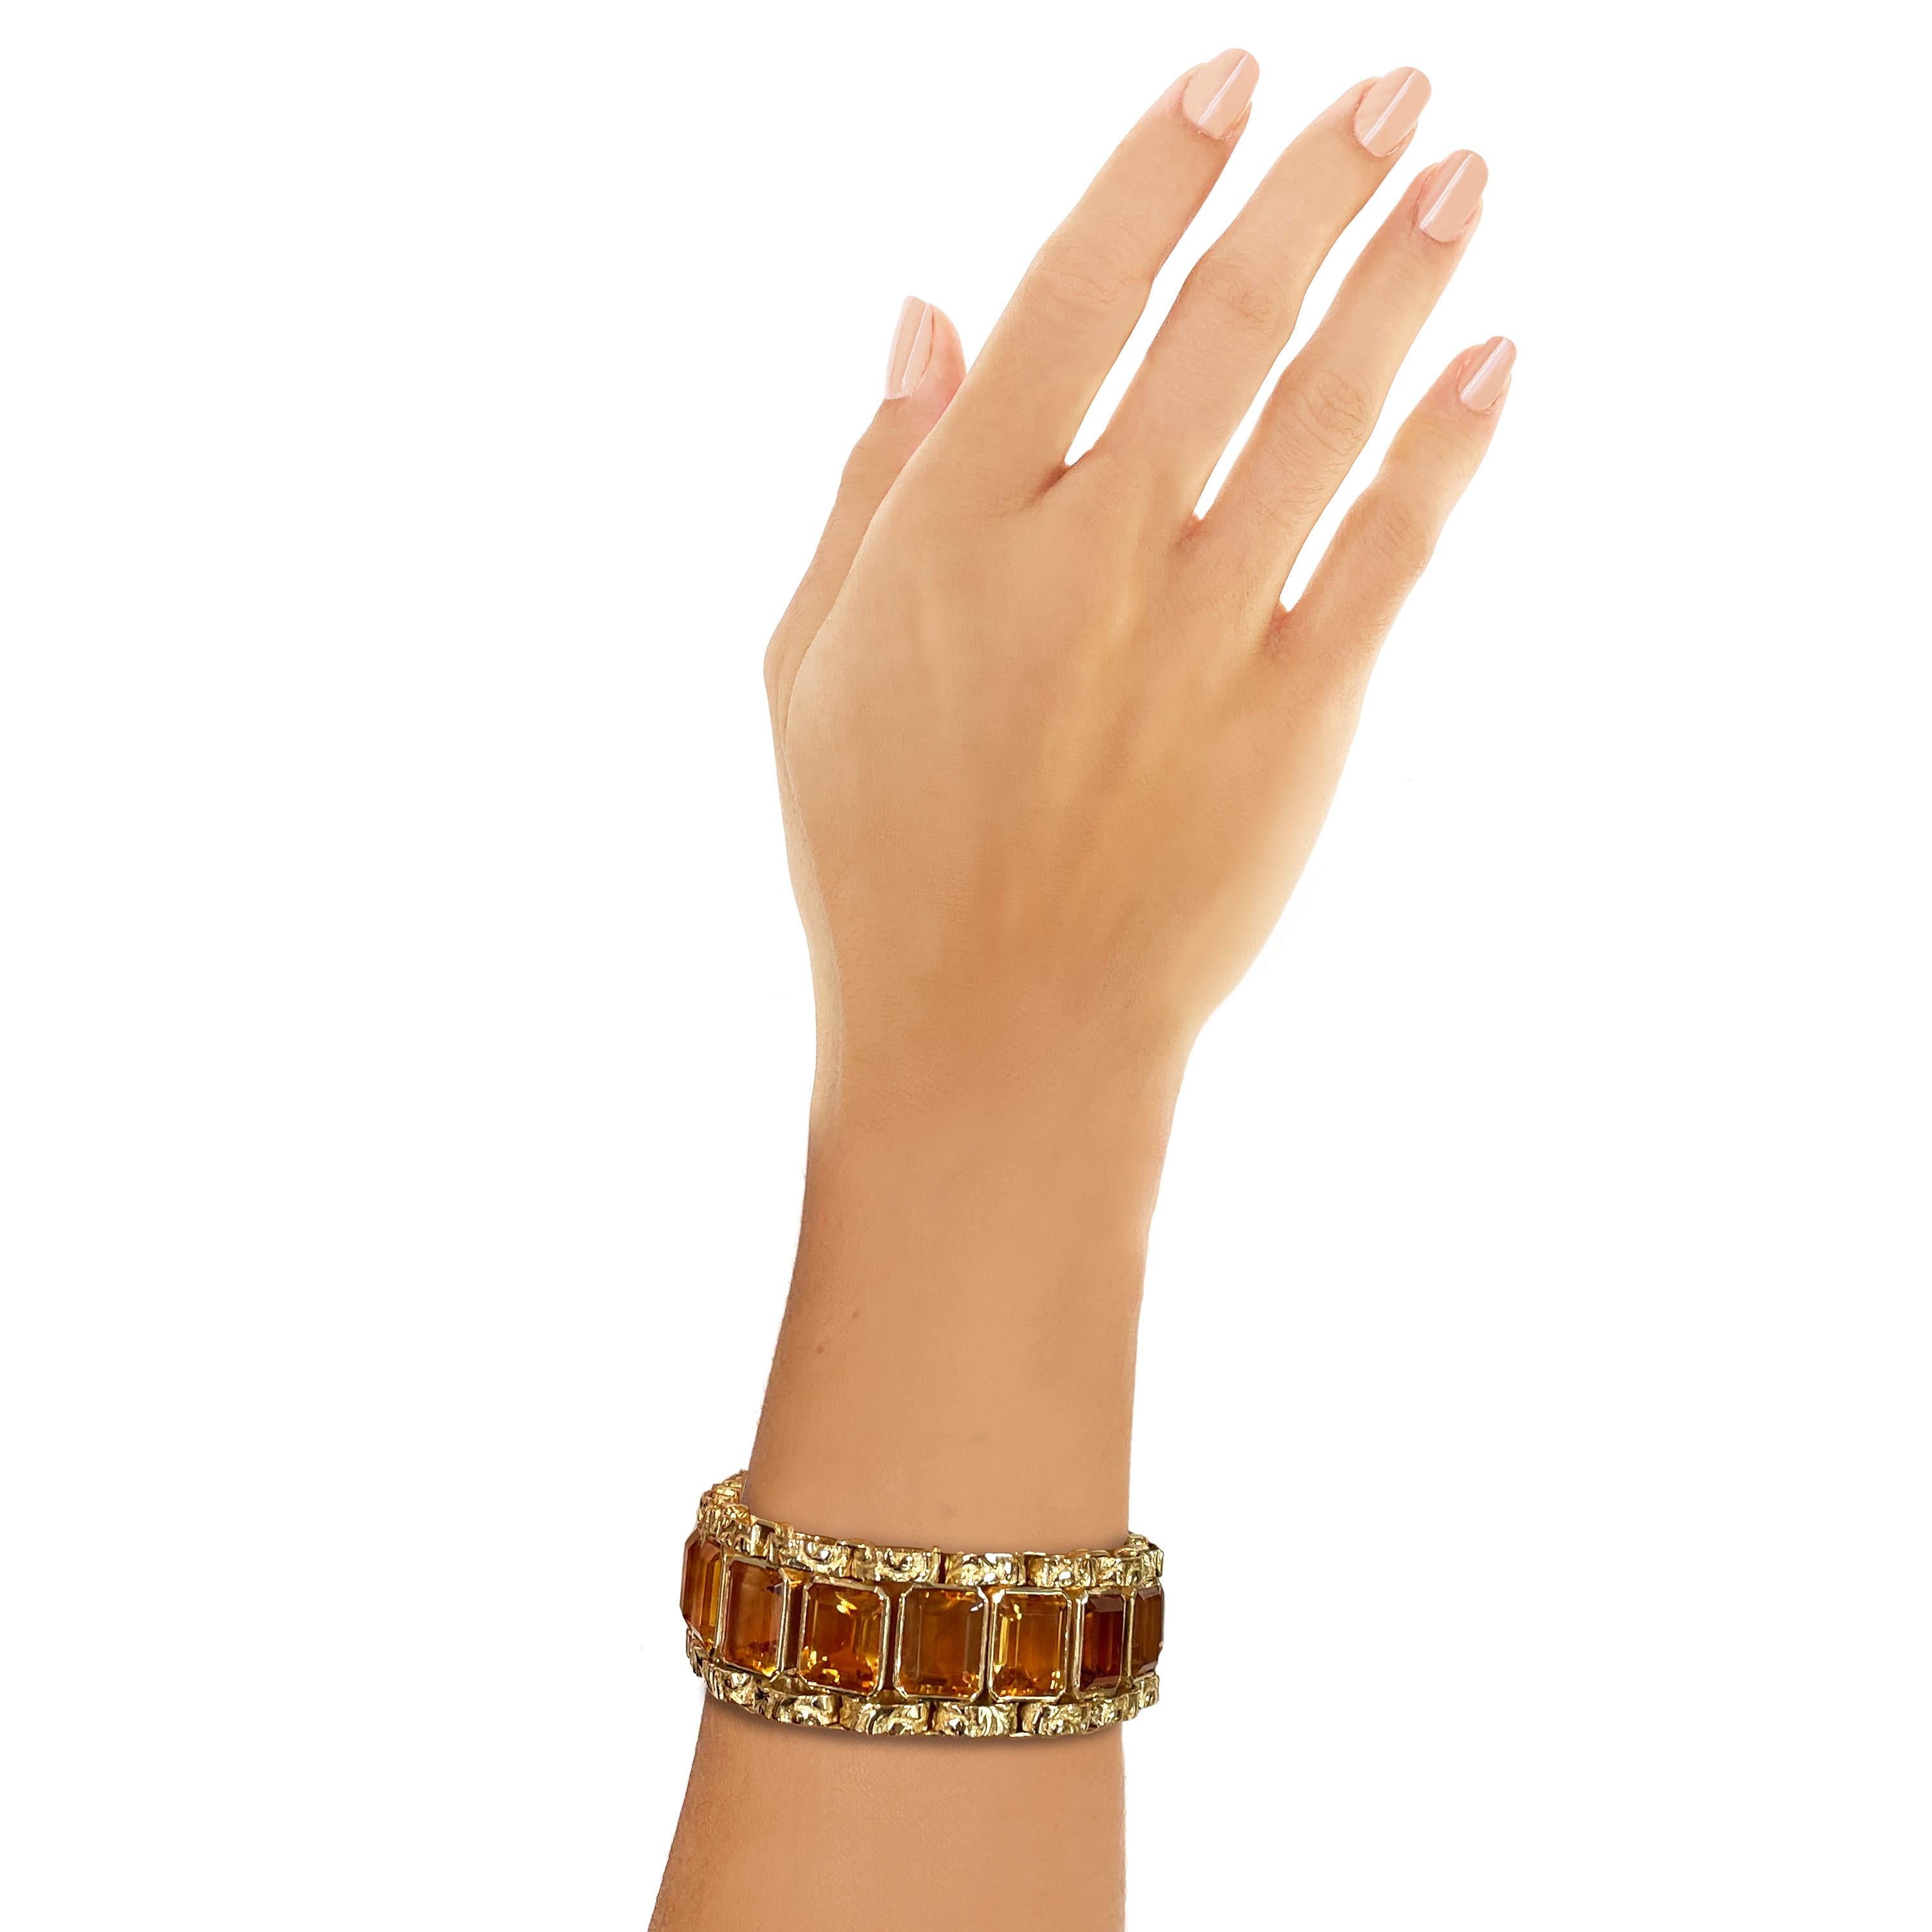 Vintage Rosior Hand Chiseled 19.2 K Yellow Gold Bracelet set with:
- 19 